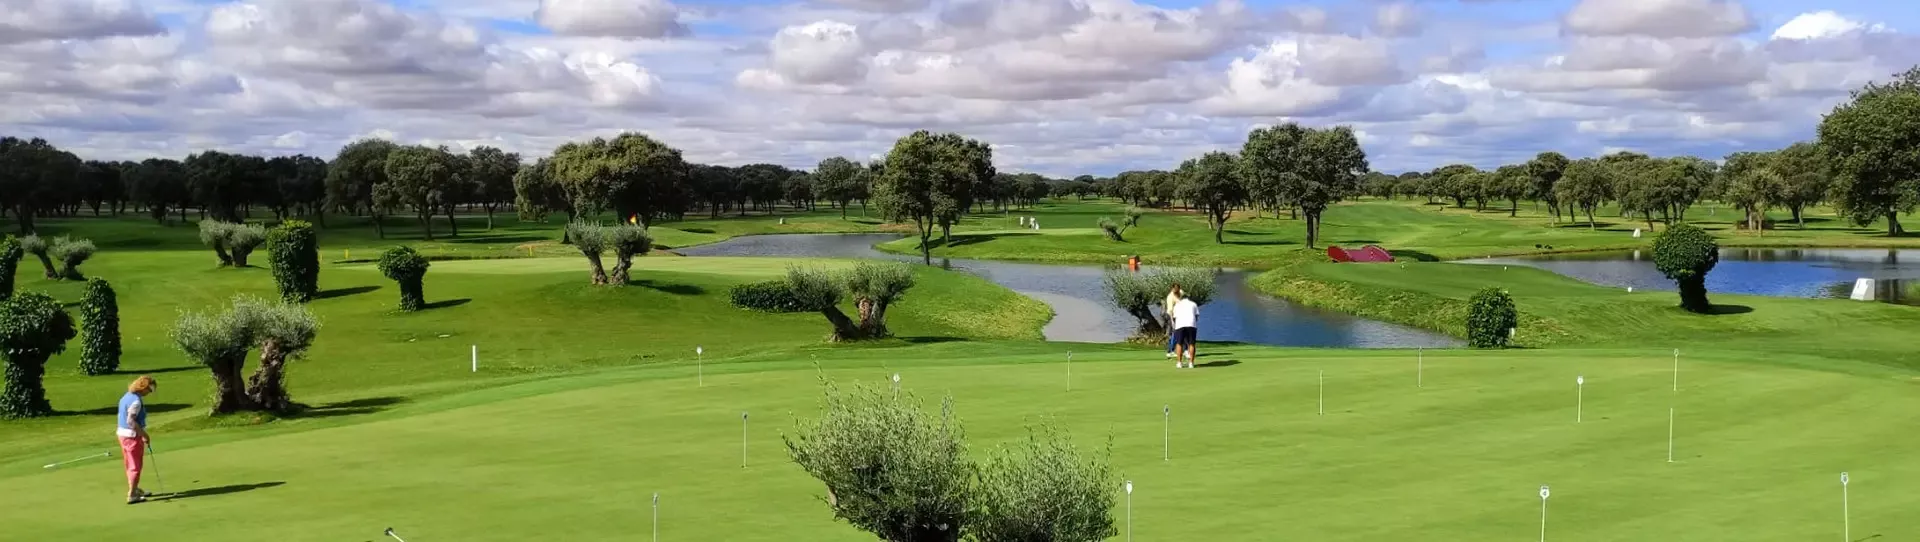 Spain golf courses - La Valmuza Golf Course - Photo 3